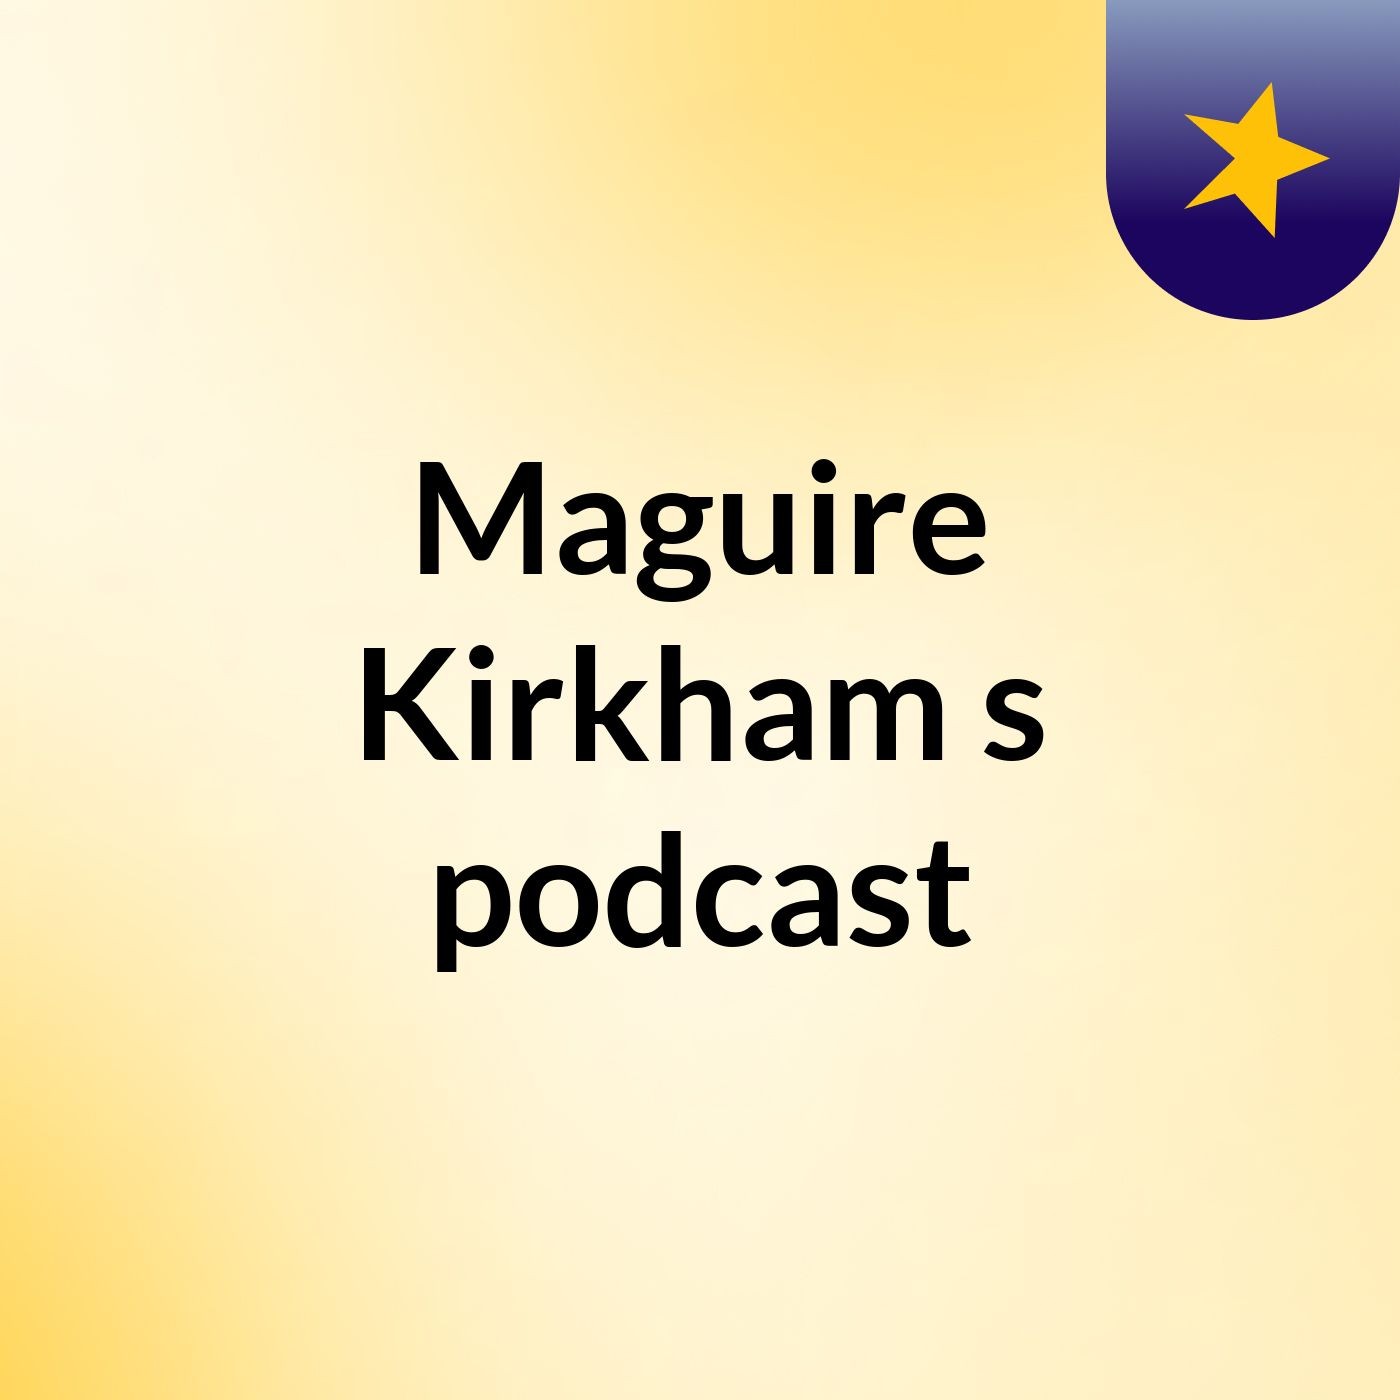 Episode 3 - Maguire Kirkham's podcast